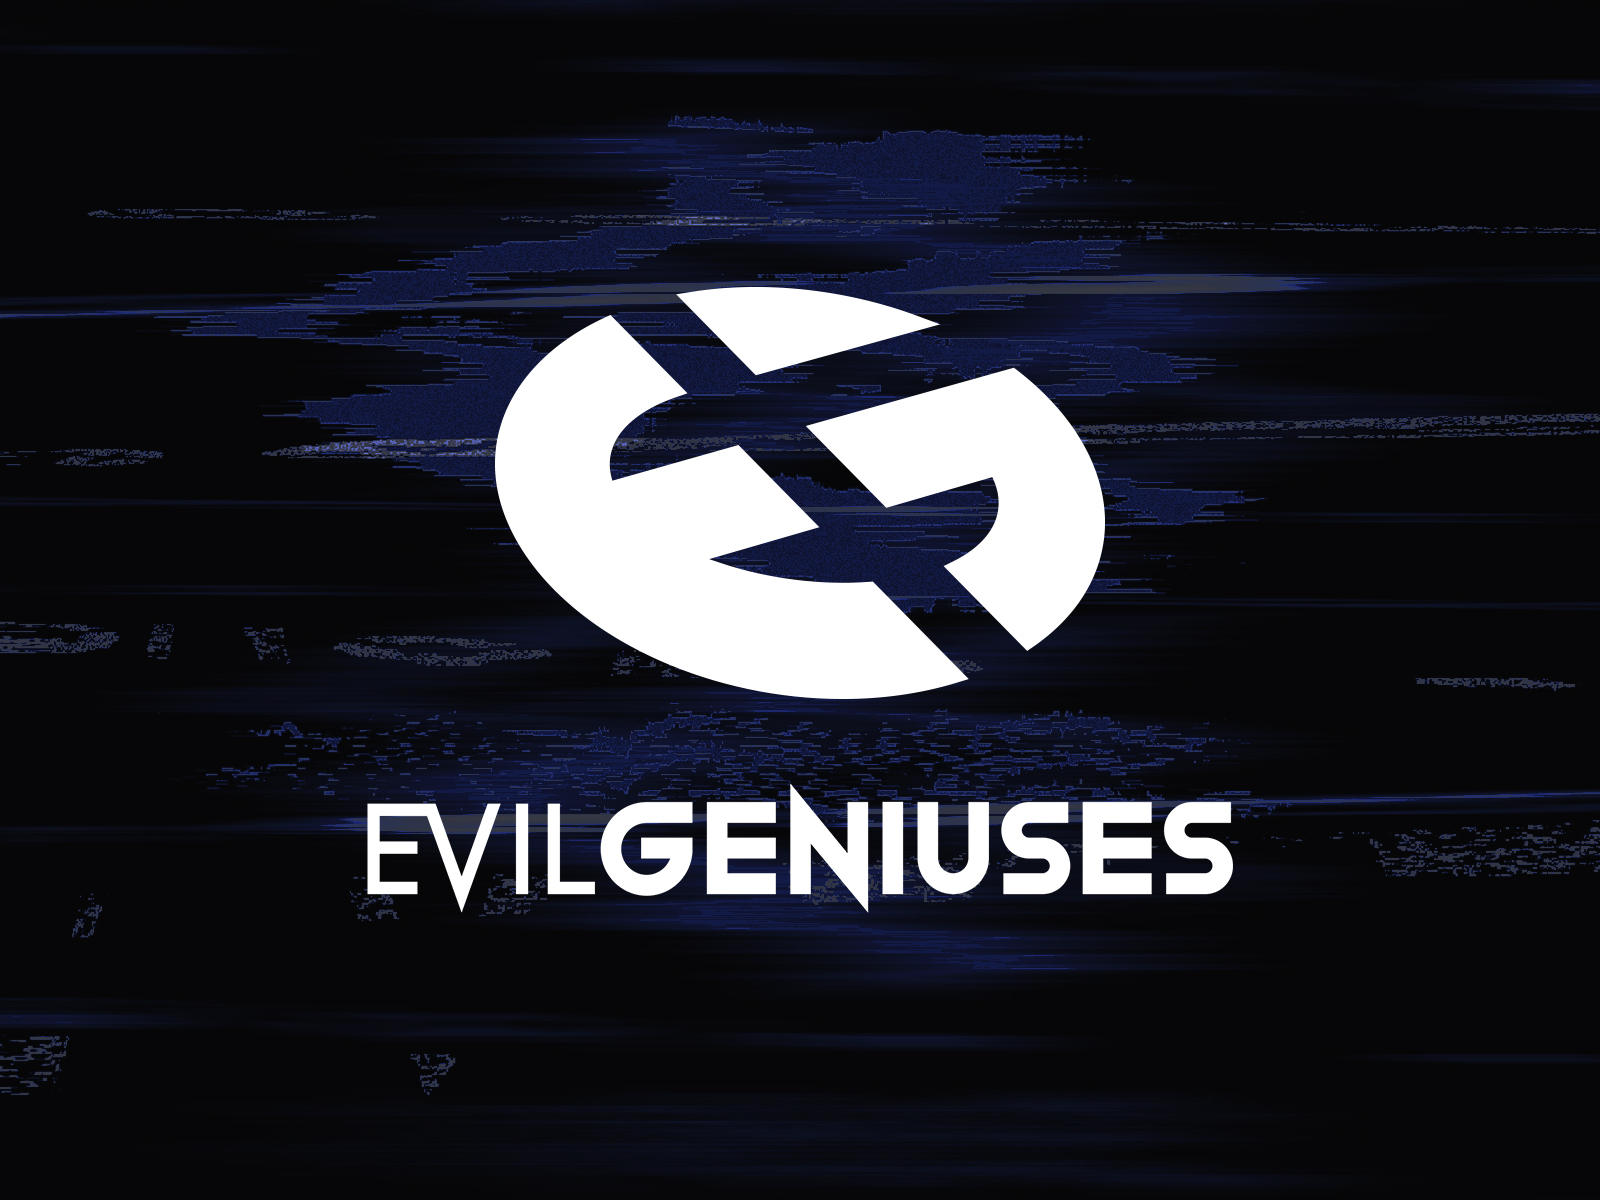 Evil Geniuses 2020 logo update concept #2 by Alexander GK on Dribbble